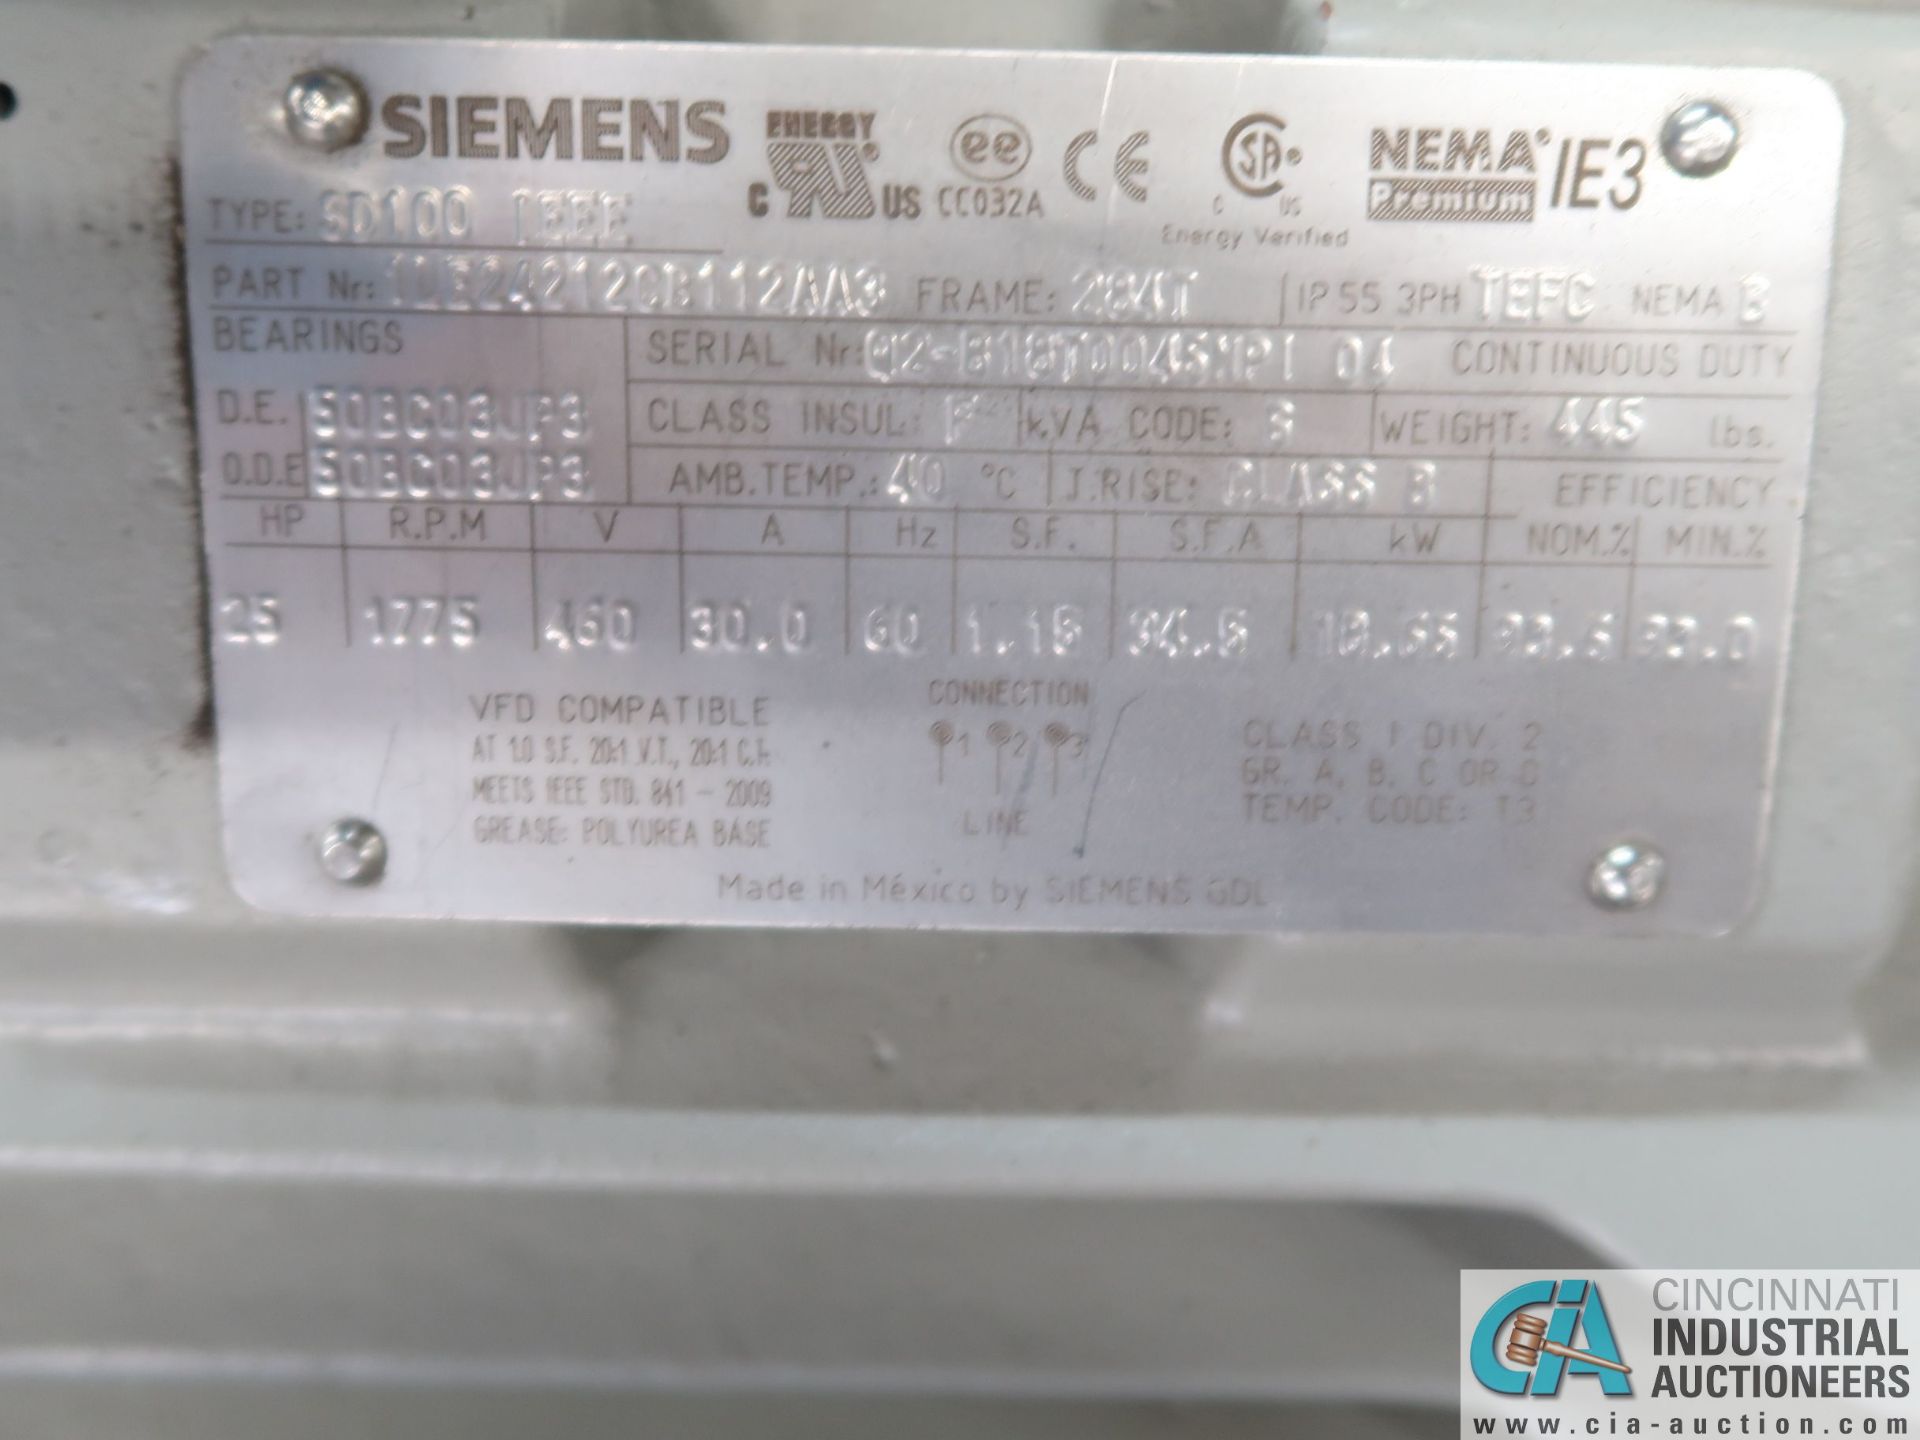 25 HP SIEMENS TYPE SD100 IEEE ELECTRIC MOTOR, 1,775 RPM (NEW) - Image 2 of 2